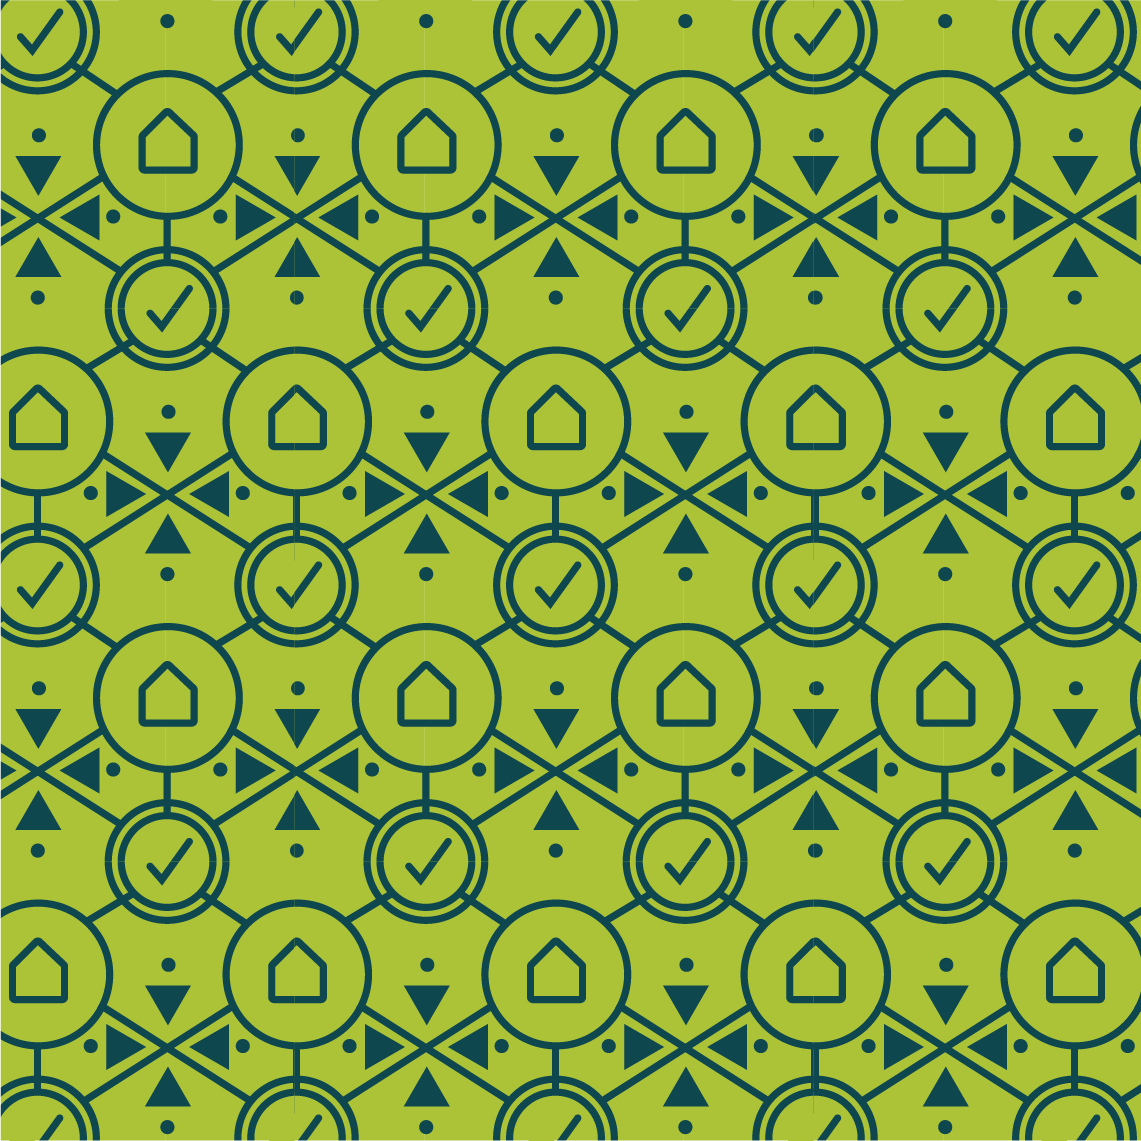 Drucker School of Management Green Pattern designed by Kilter